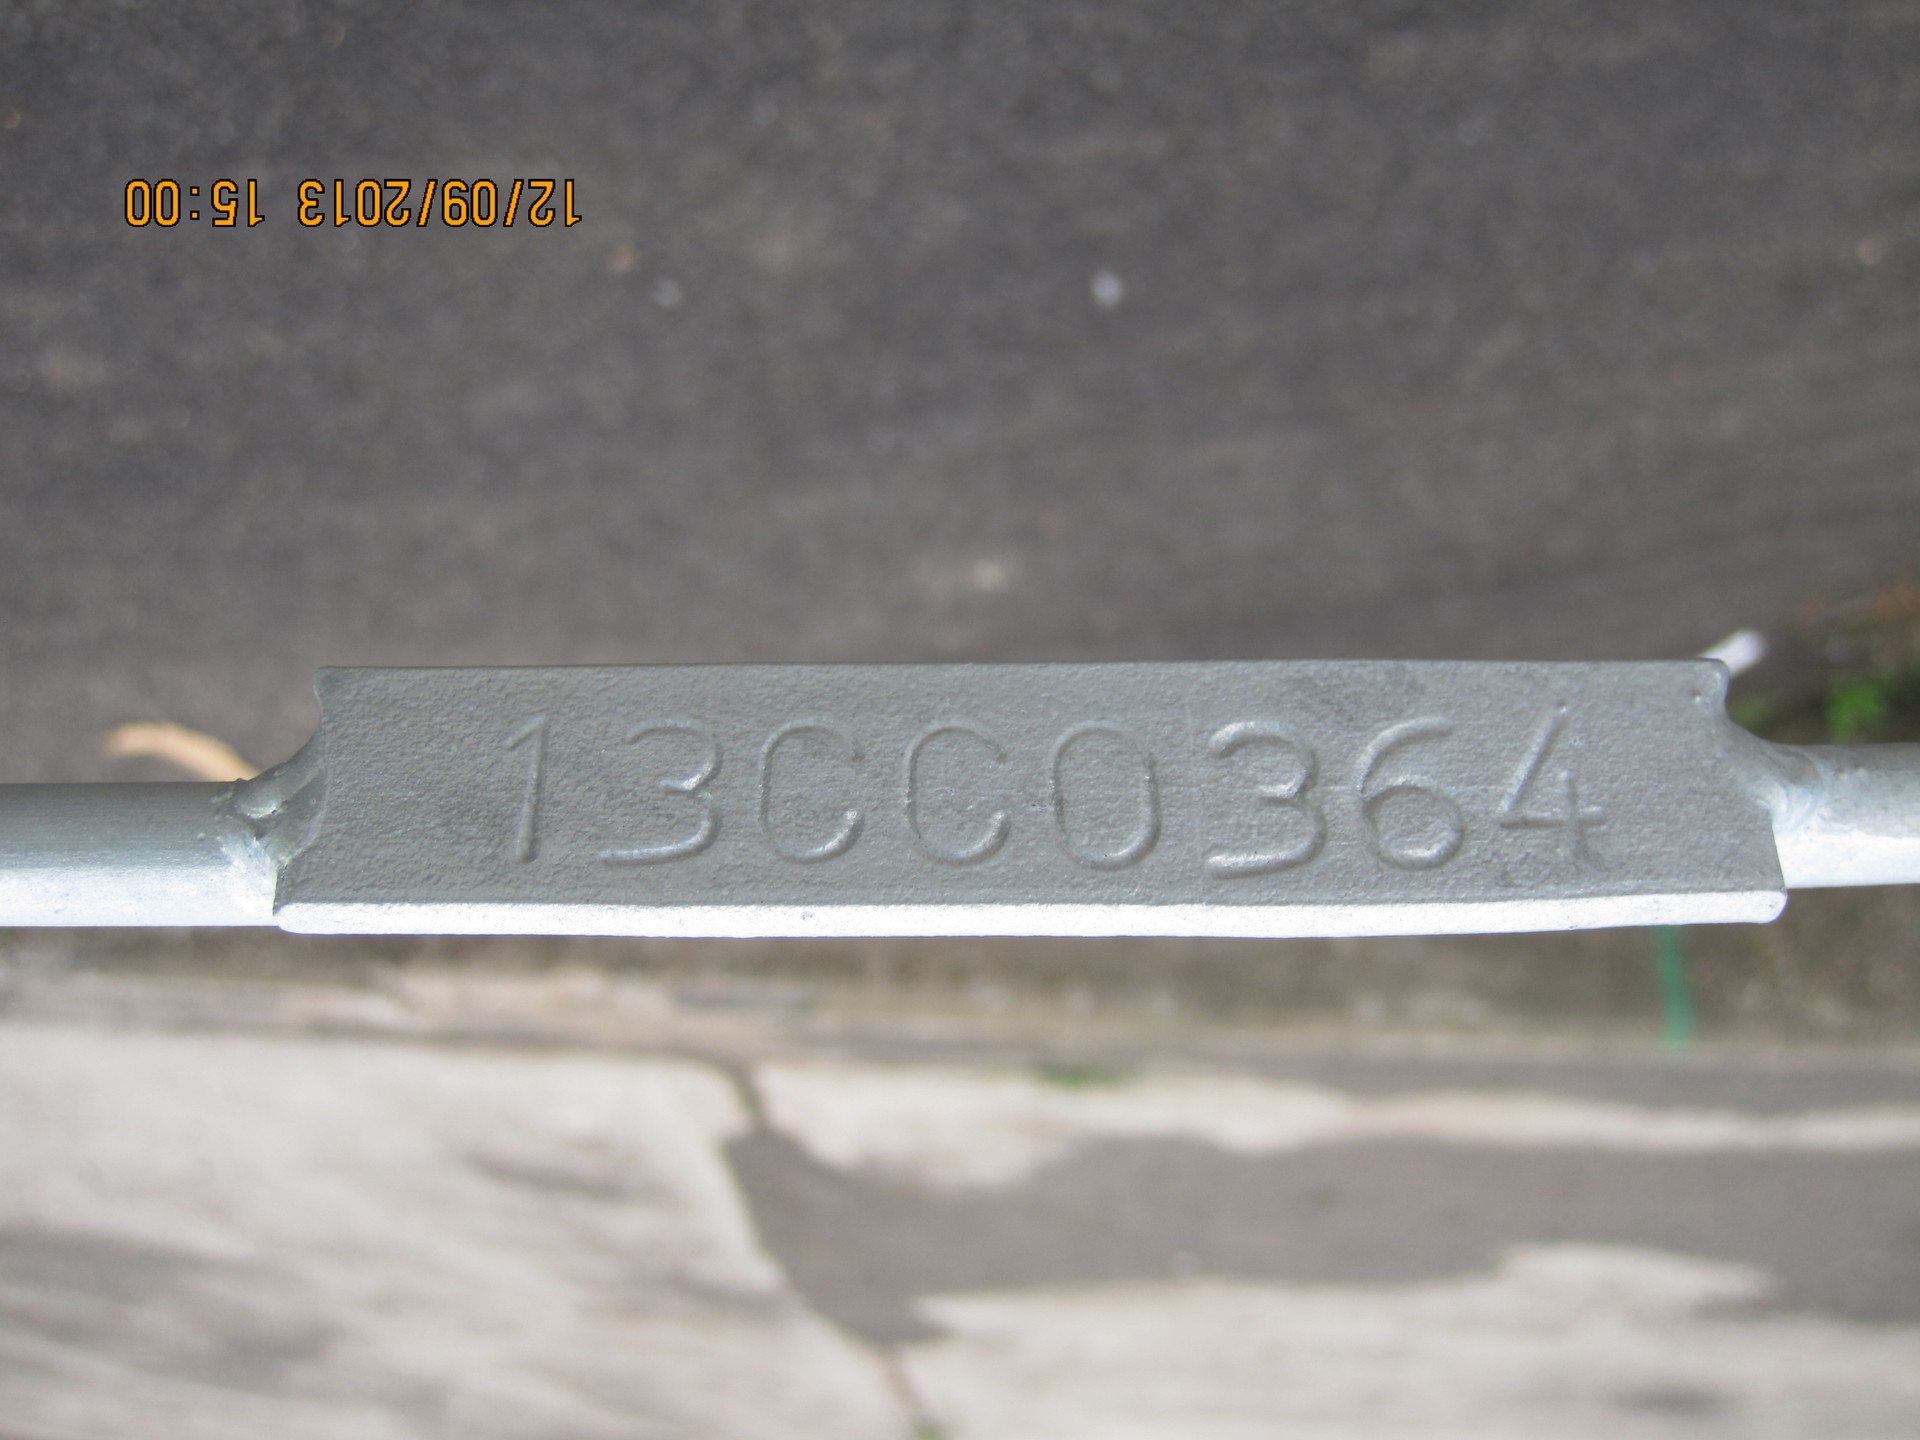 CarlC Tower Serial Number Plate